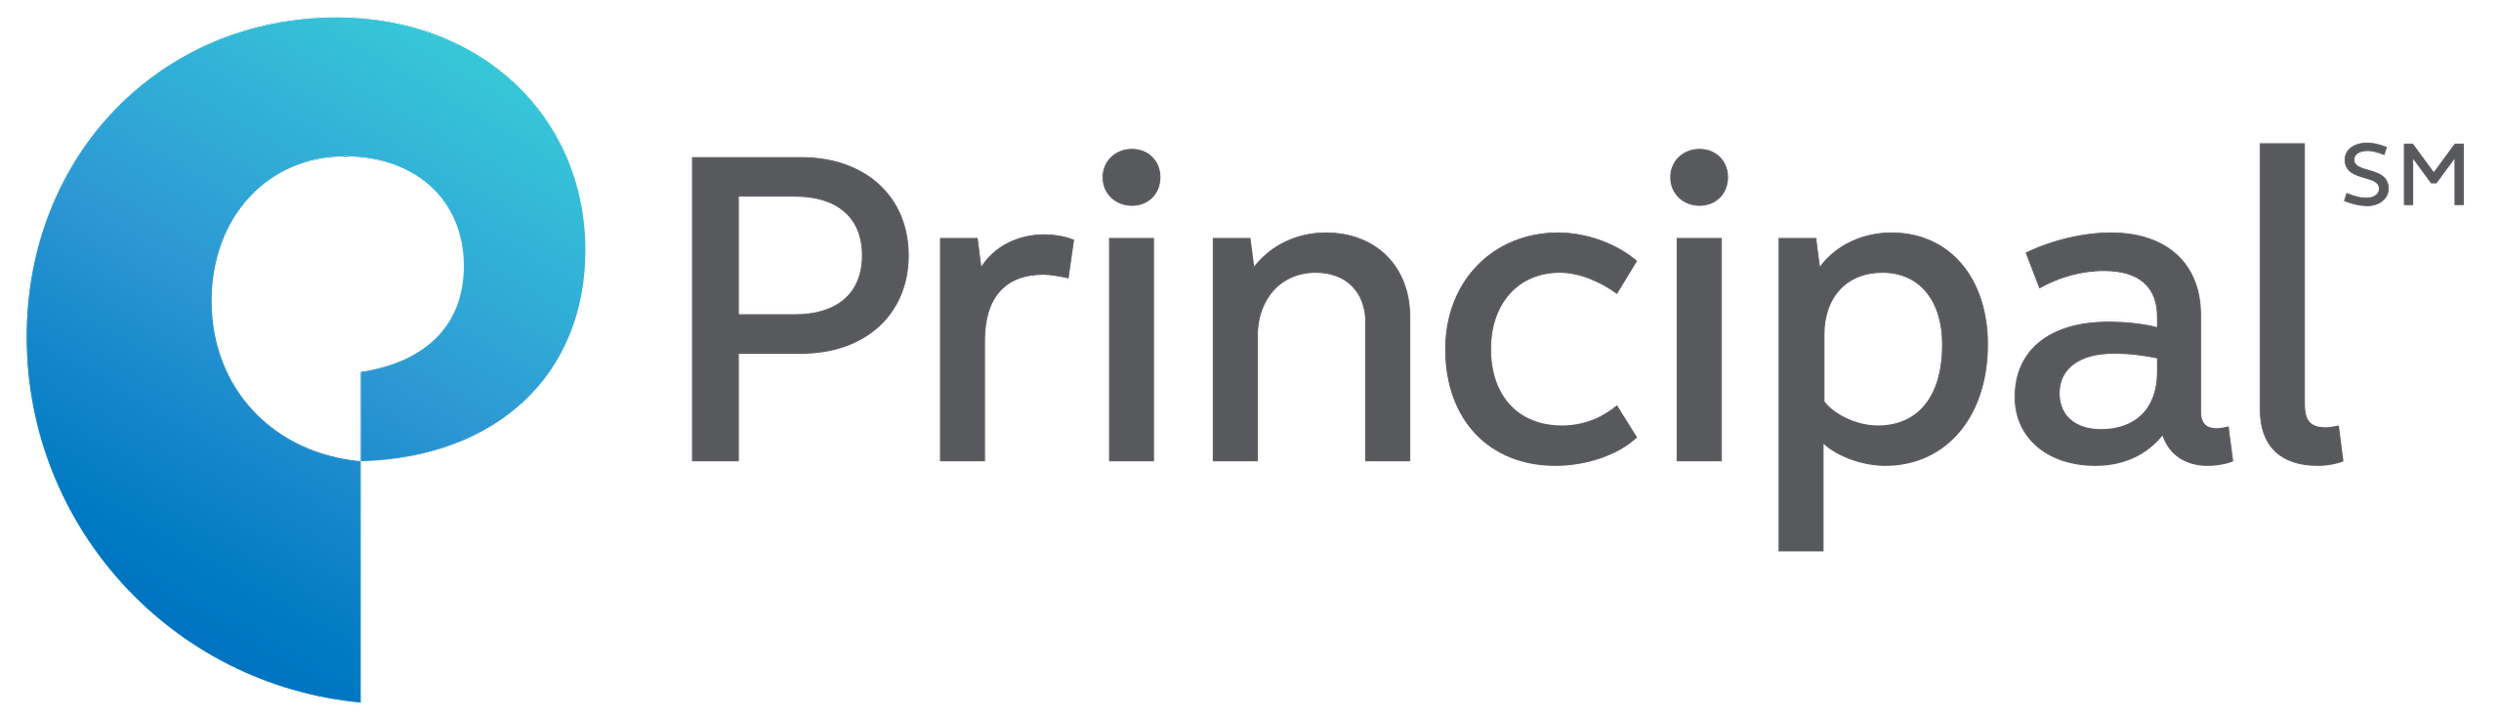 Principal Dental Insurance Logo.png